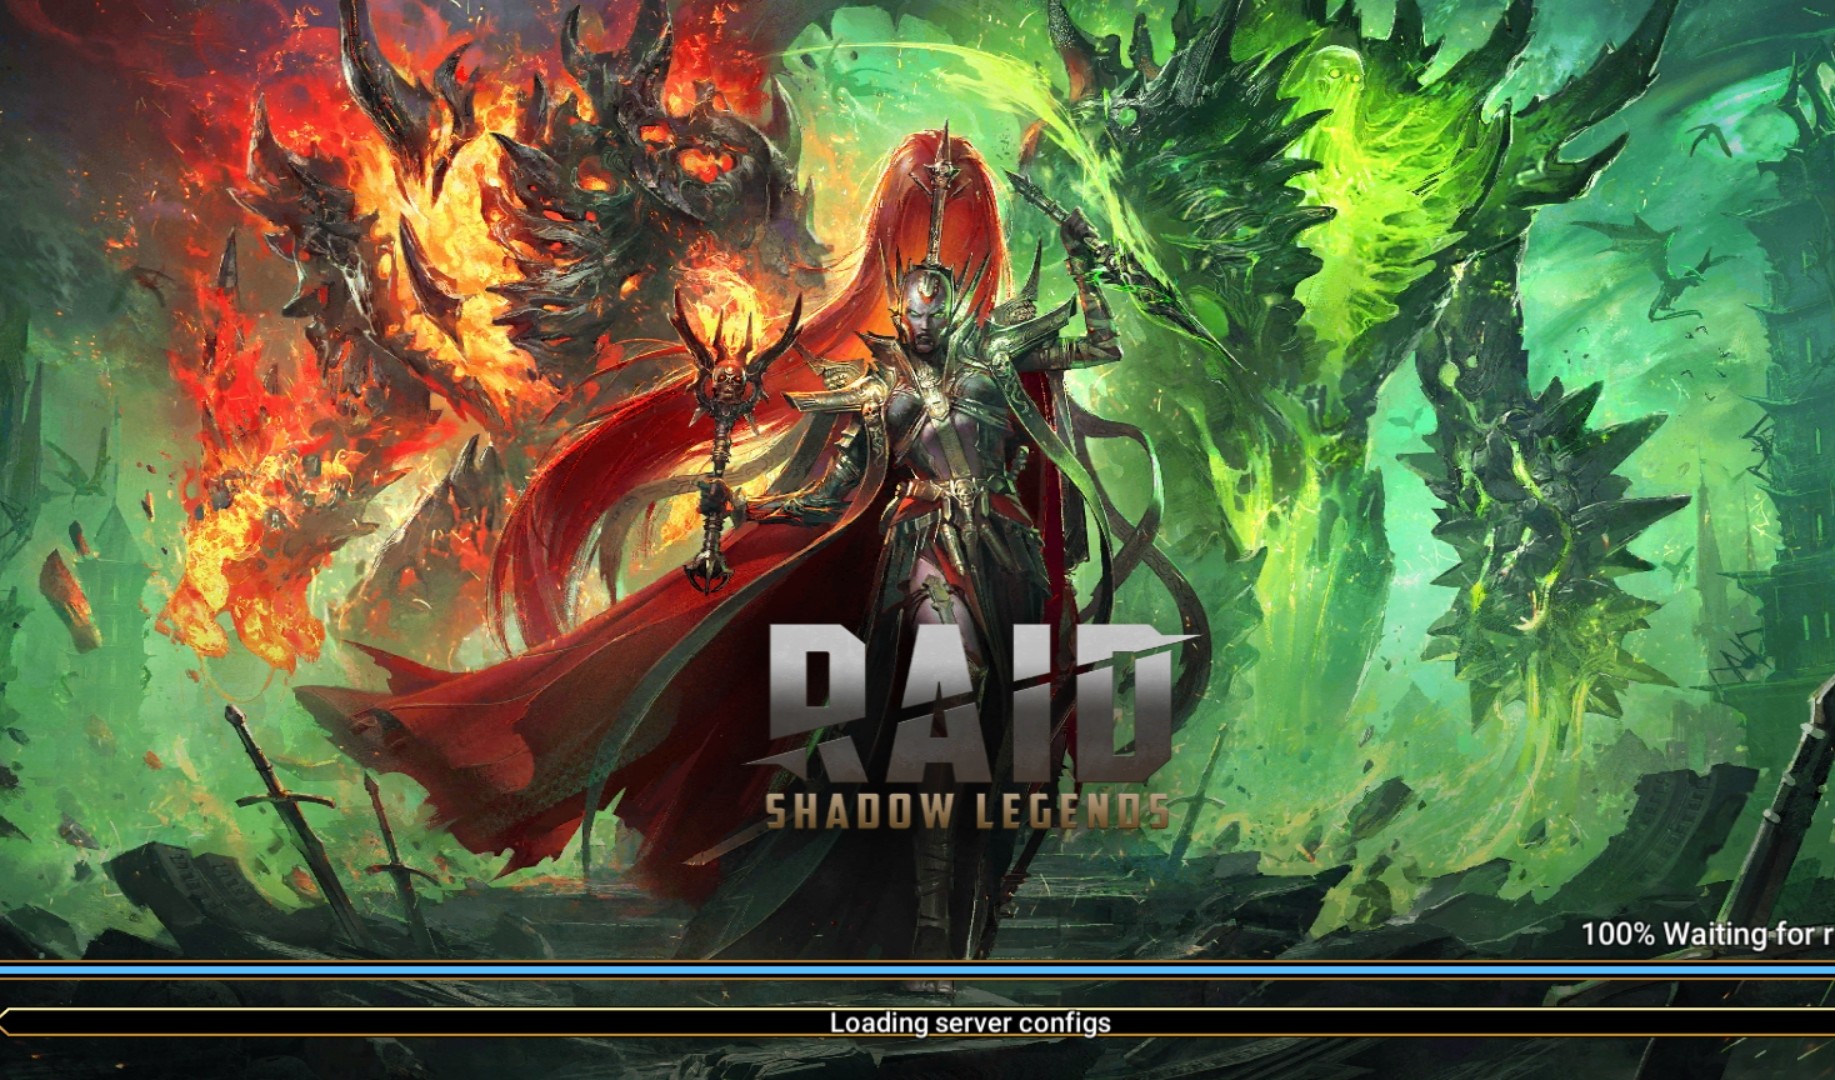 raid: shadow legends mod apk all characters unlocked